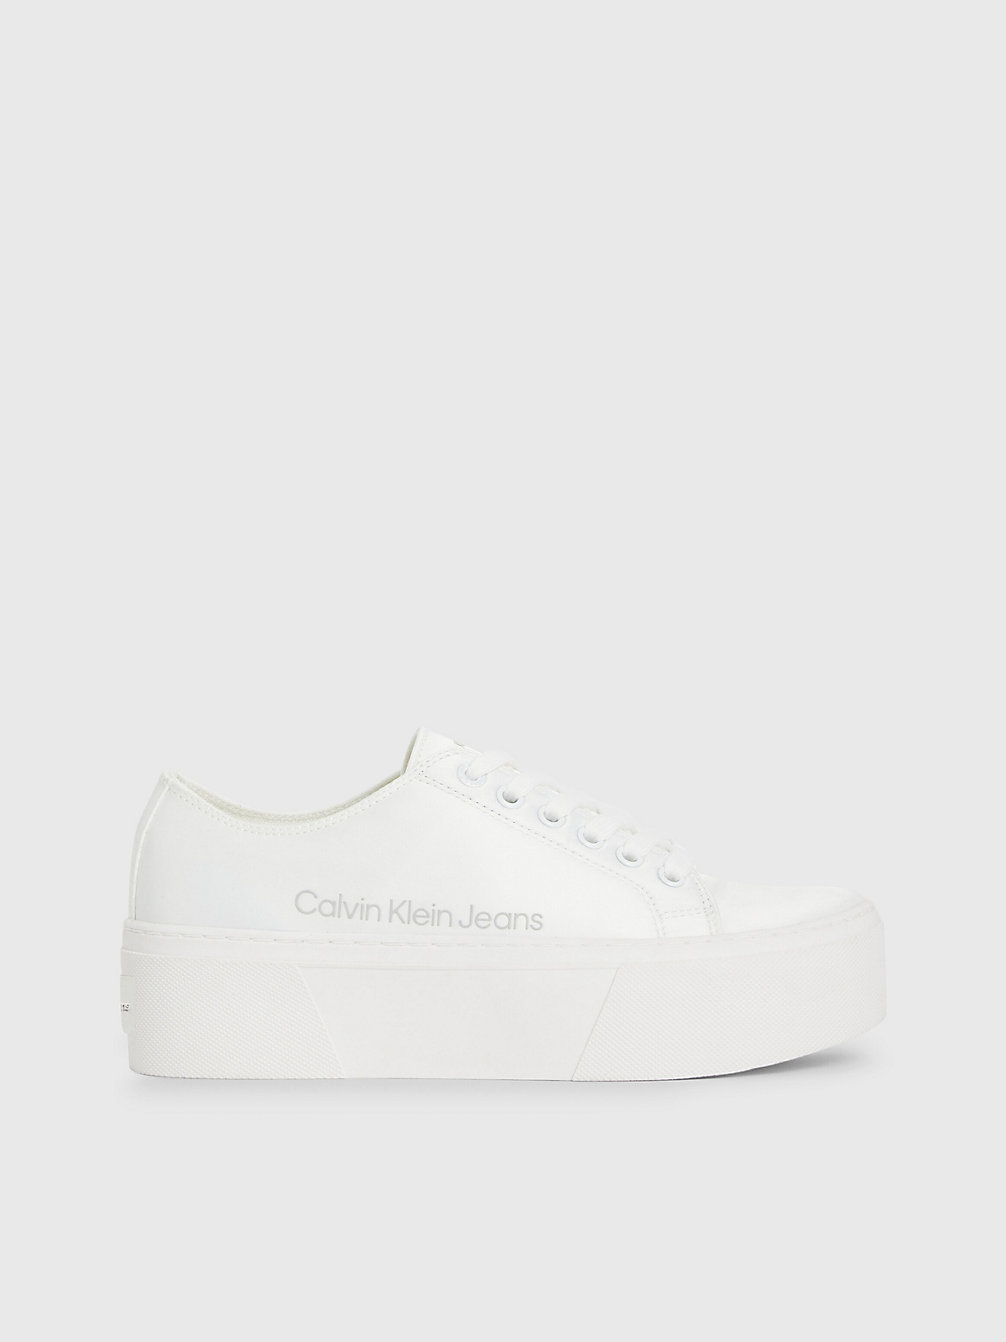 WHITE > Plateau-Sneakers Aus Recyceltem Satin > undefined Damen - Calvin Klein